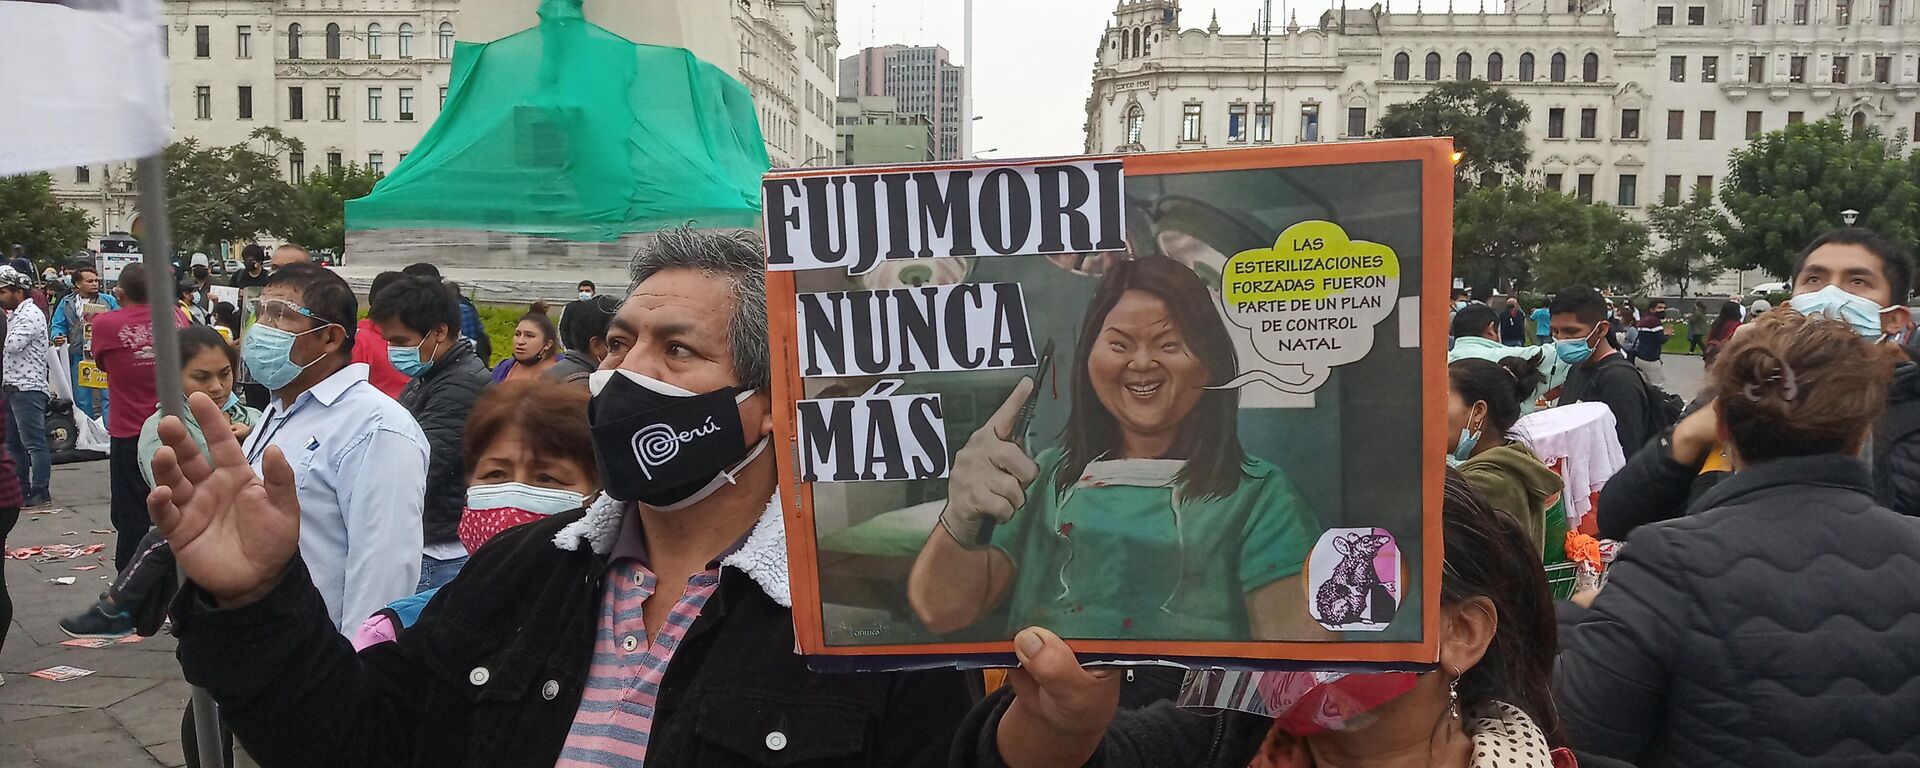 Rosa Elvira sosteniendo un cartel contra Keiko Fujimori - Sputnik Mundo, 1920, 25.06.2021